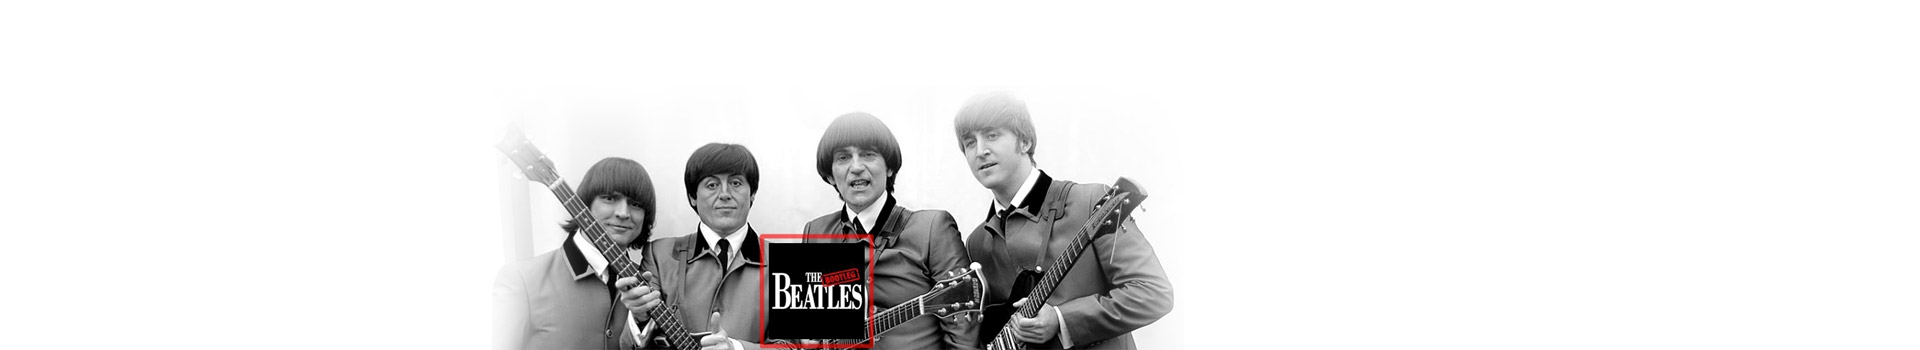 The Bootleg Beatles tickets at the Royal Albert Hall